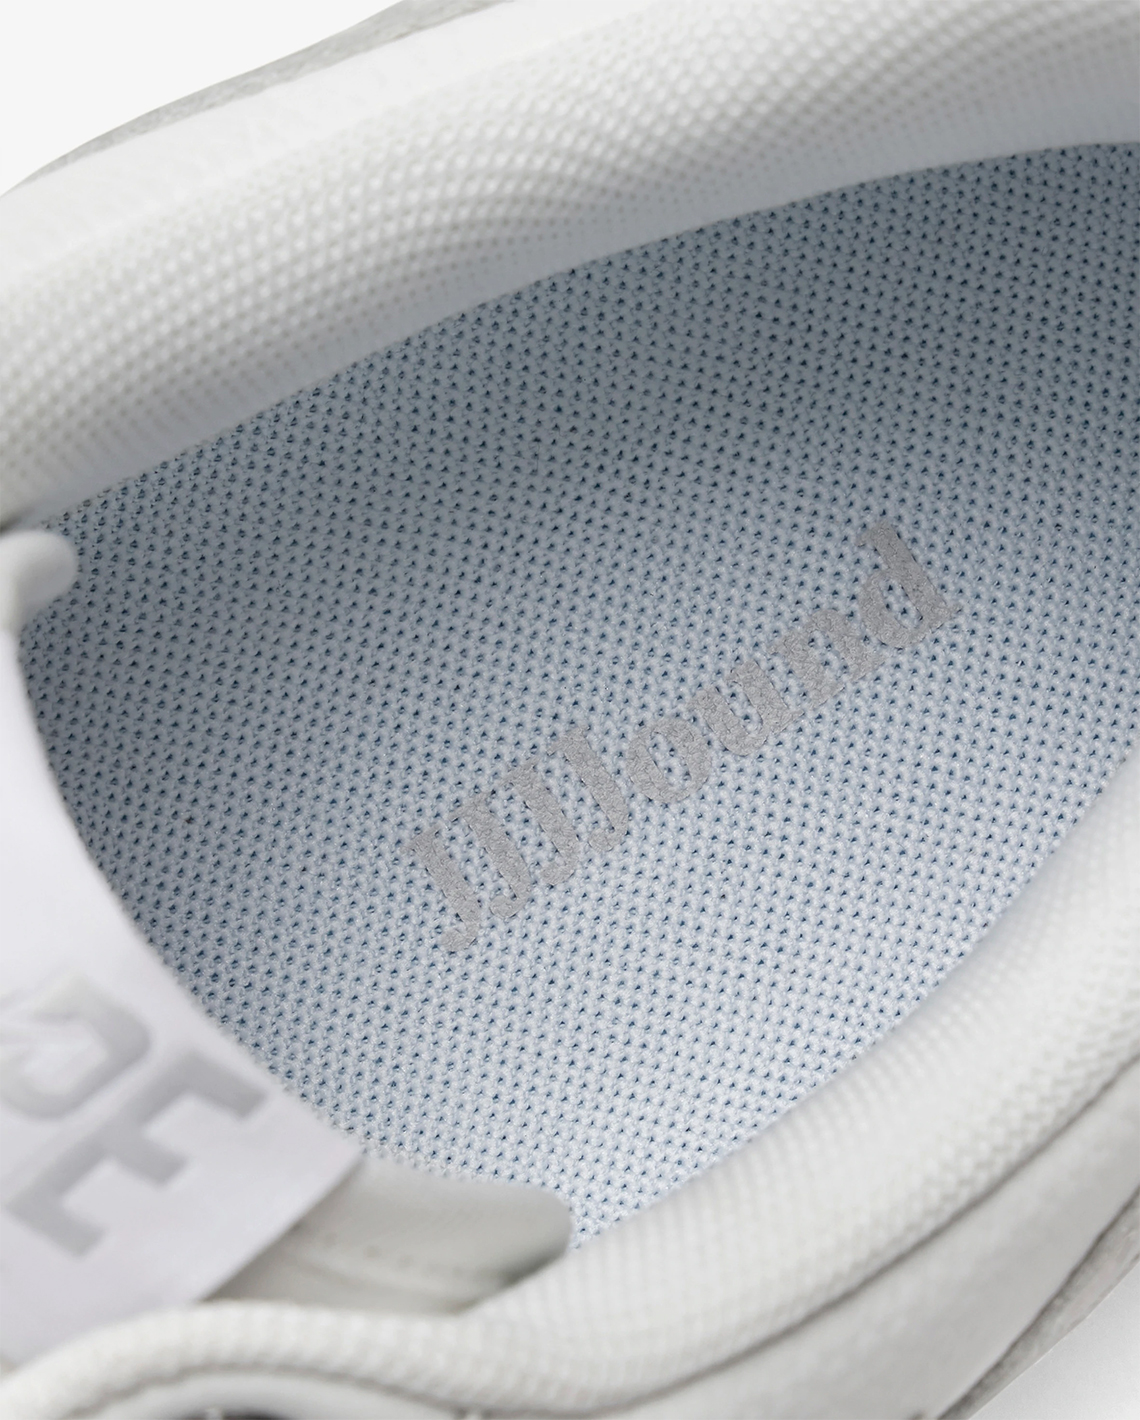 Jjjjound Nike Air Fear Of God MOC White Grey Release Date 11